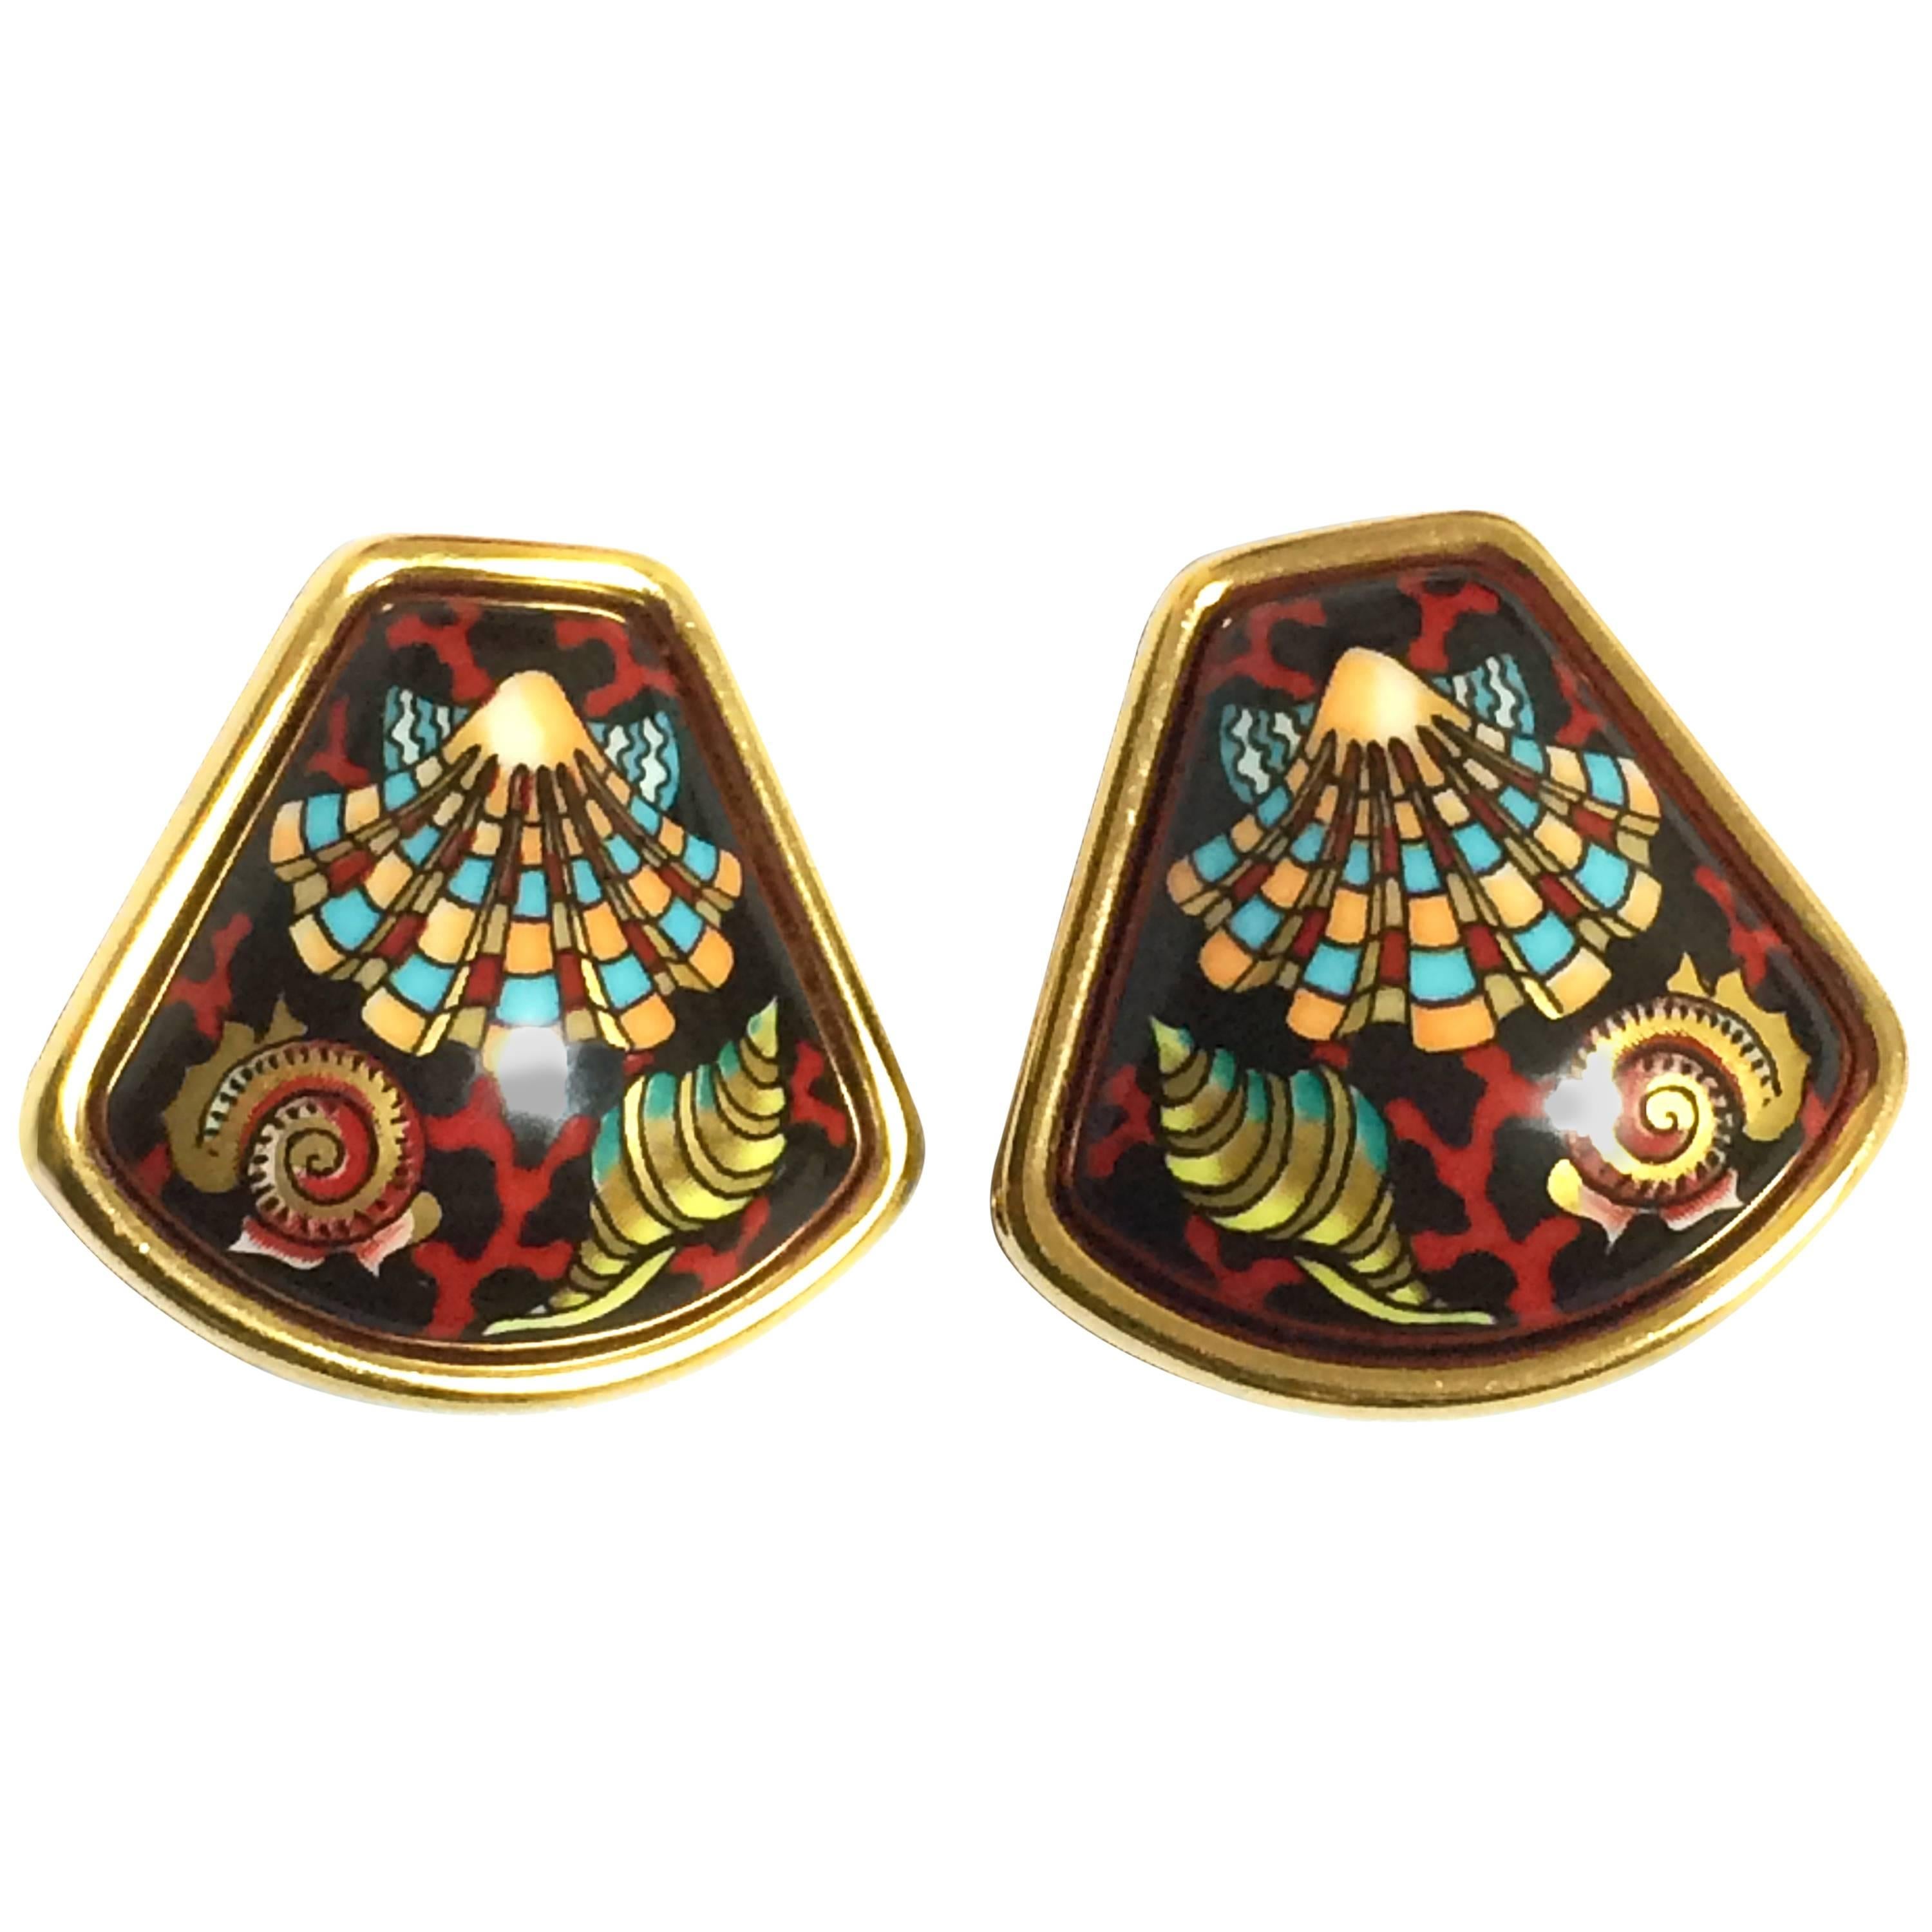 Vintage Hermes cloisonne enamel golden earrings with black ocean, red, blue etc